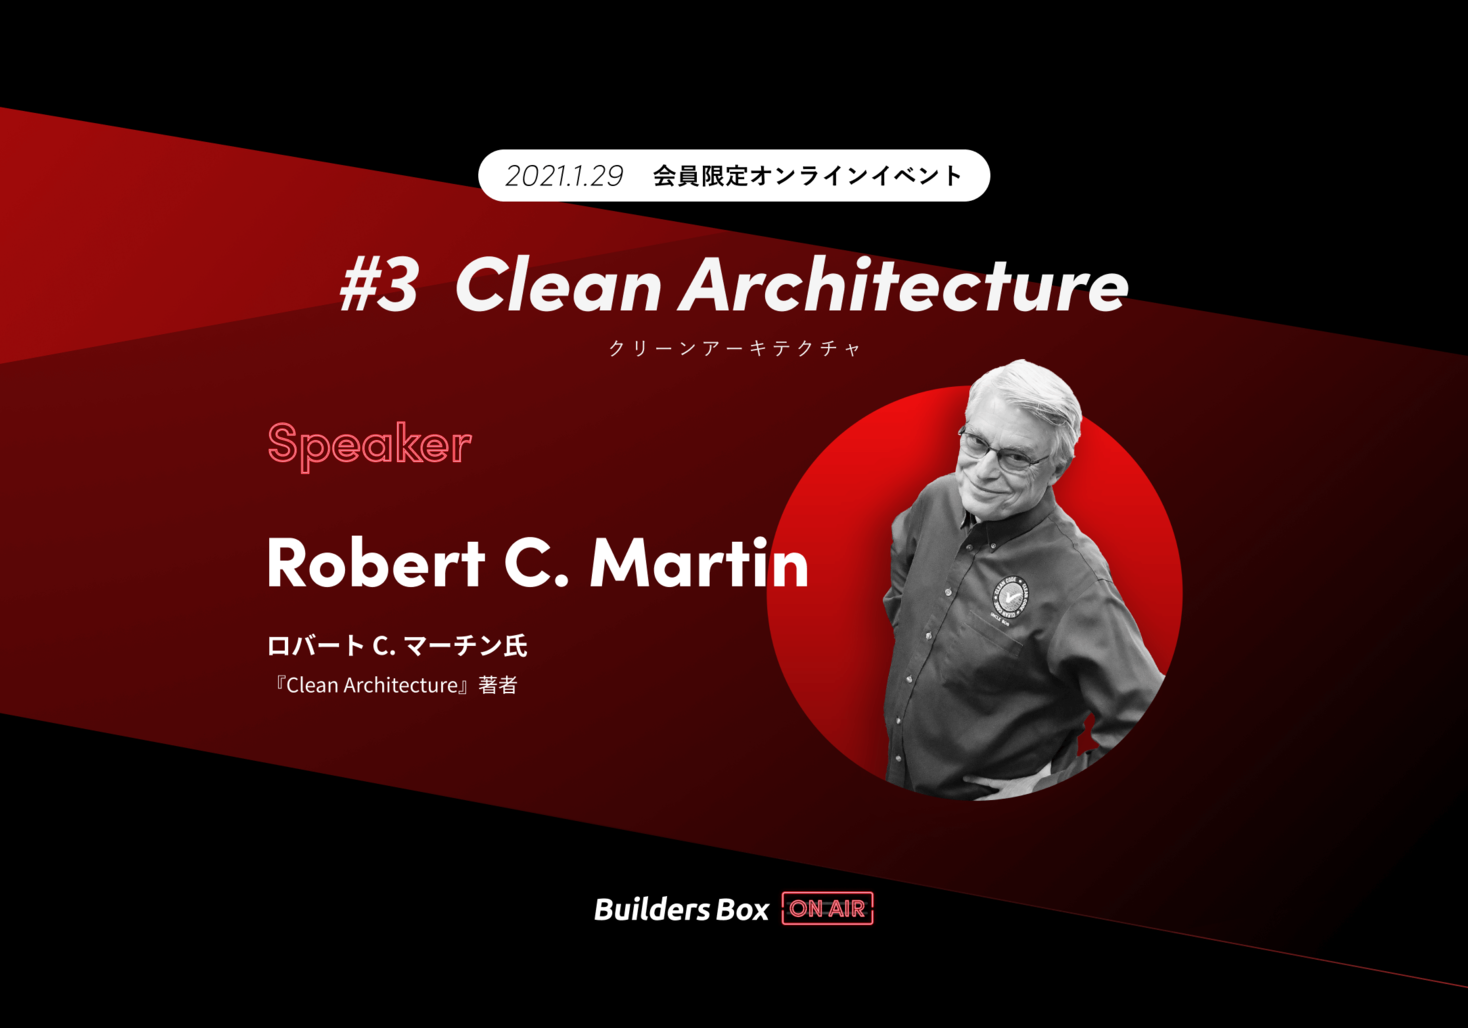 Clean Architecture提唱者 Robert C. Martin氏が登壇。オンライン